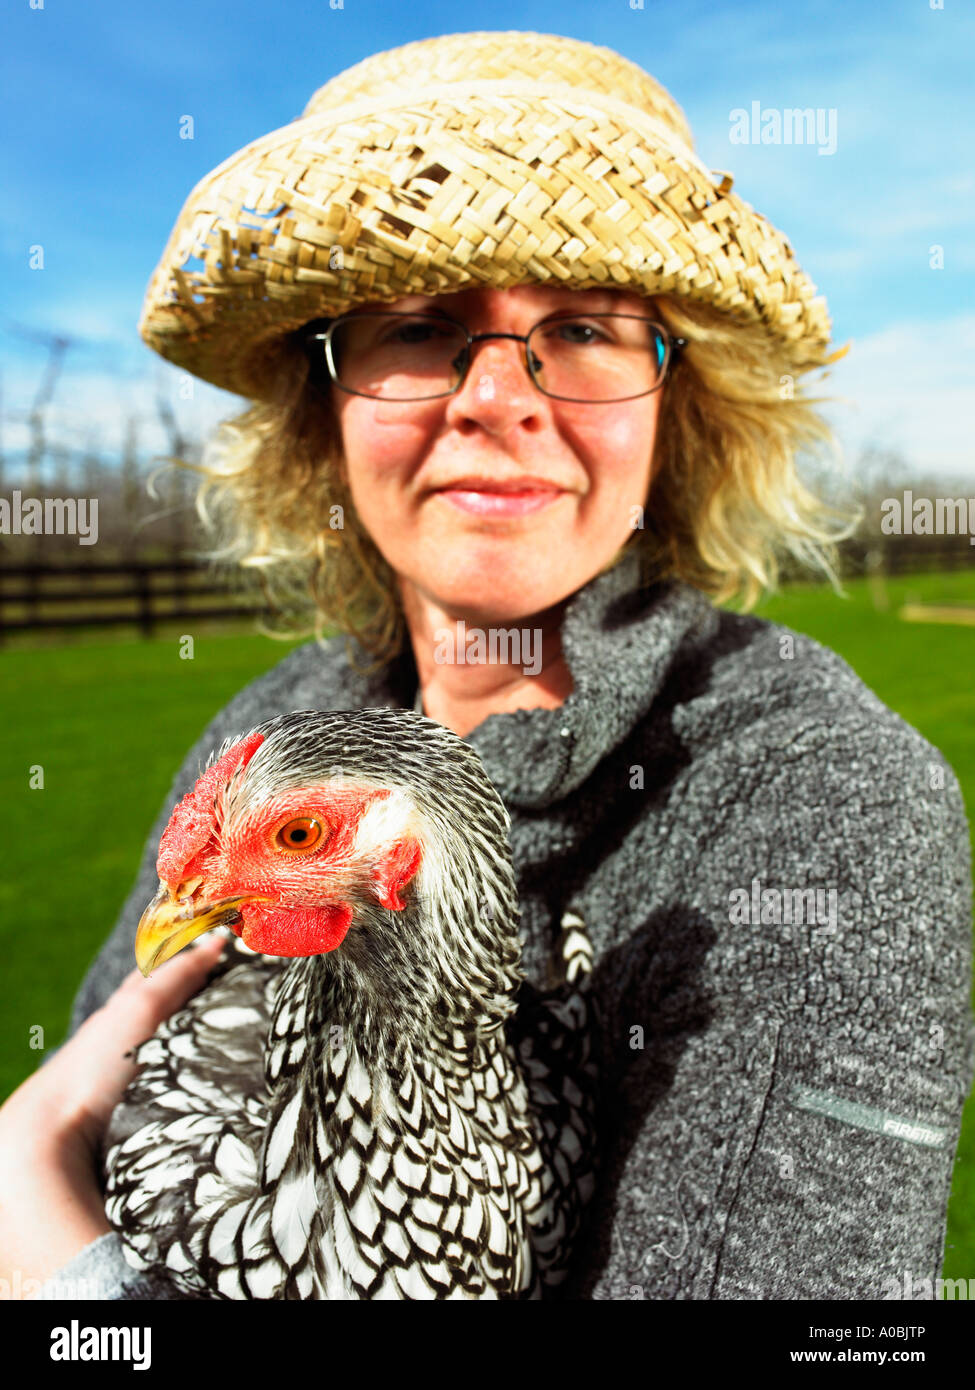 Frau hält ihr Haustier Huhn Huhn Hut im Sommer Stockfotografie - Alamy